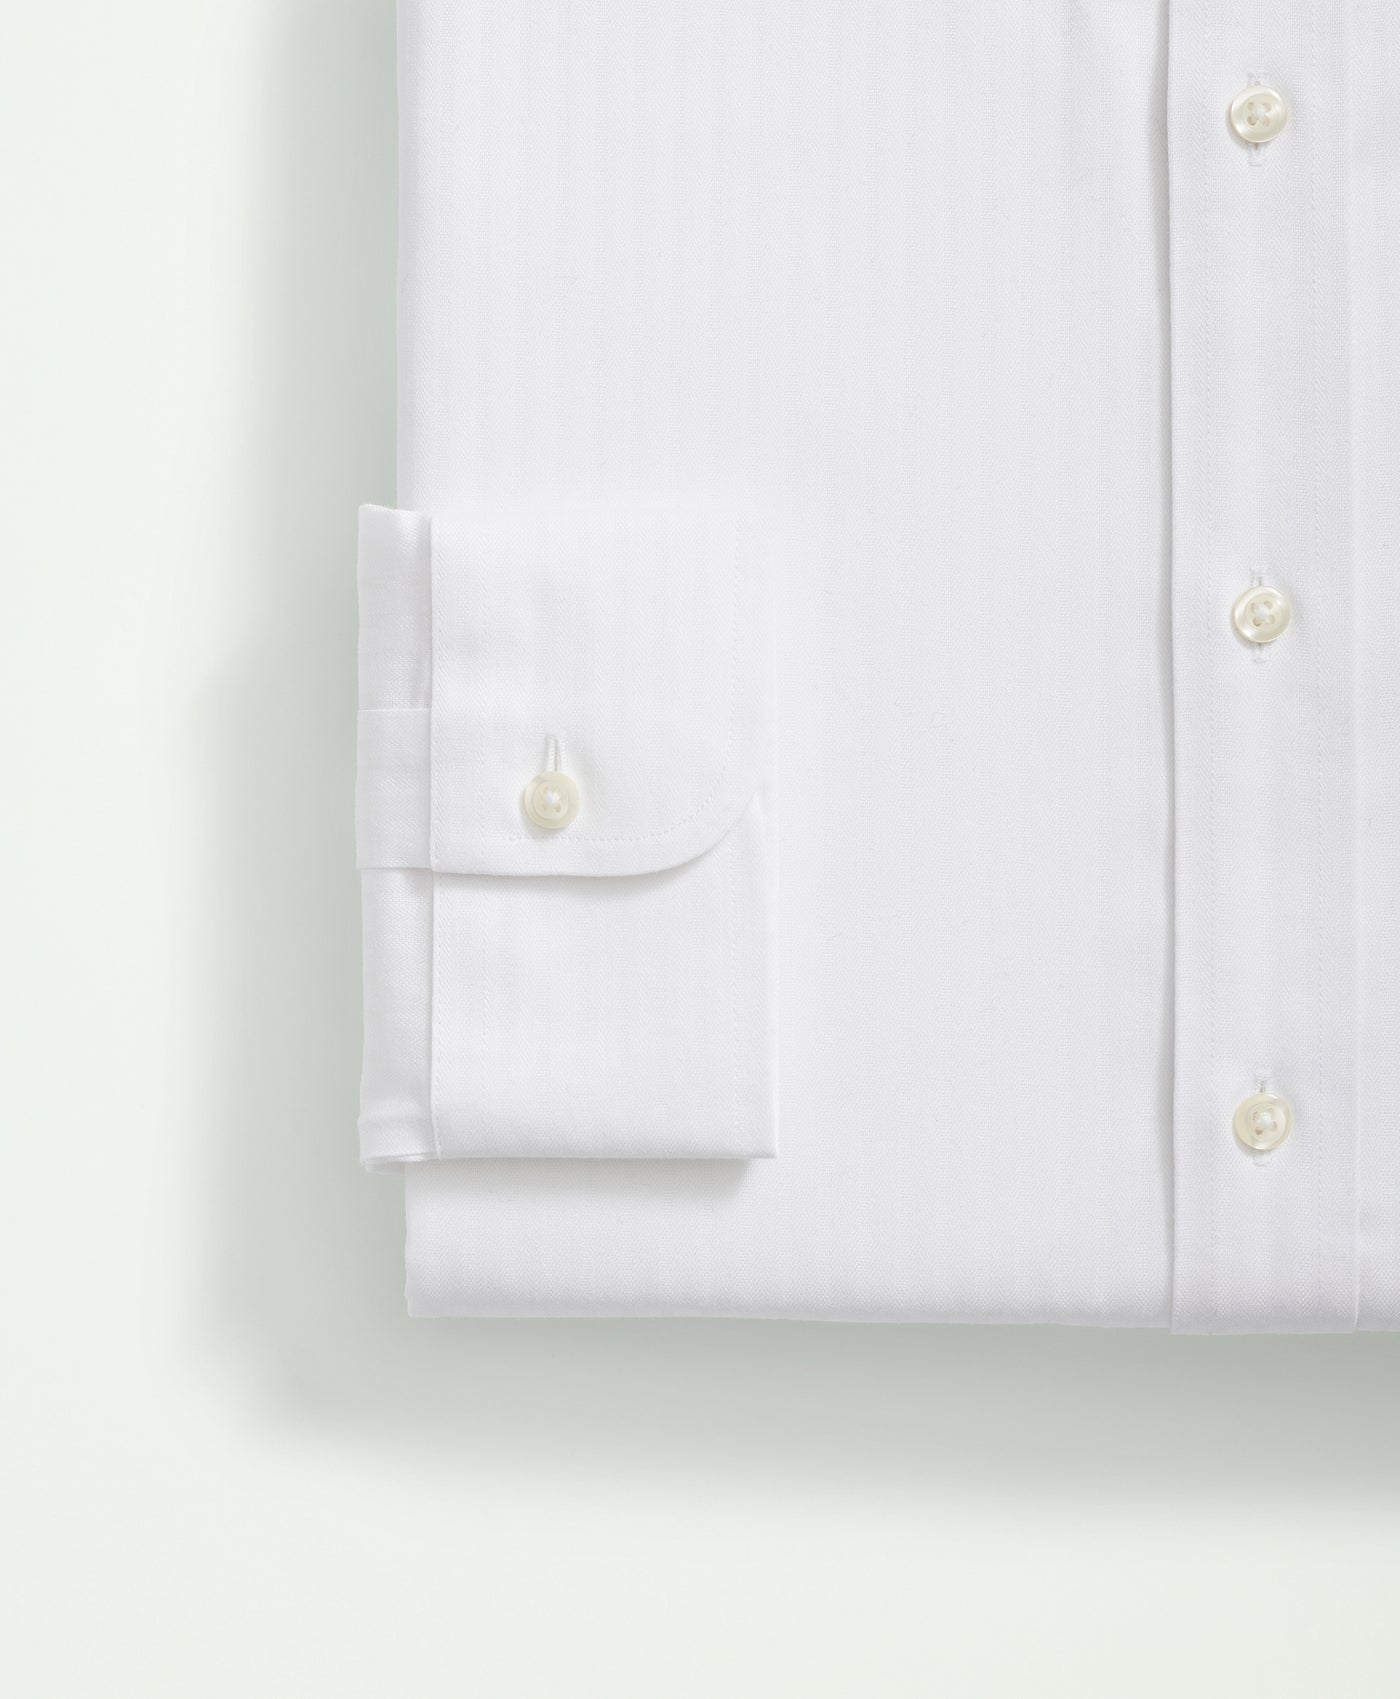 Regent Regular-Fit Non-Iron Supima Cotton Dress Shirt, Polo Button Down Collar - Dobby Stripe